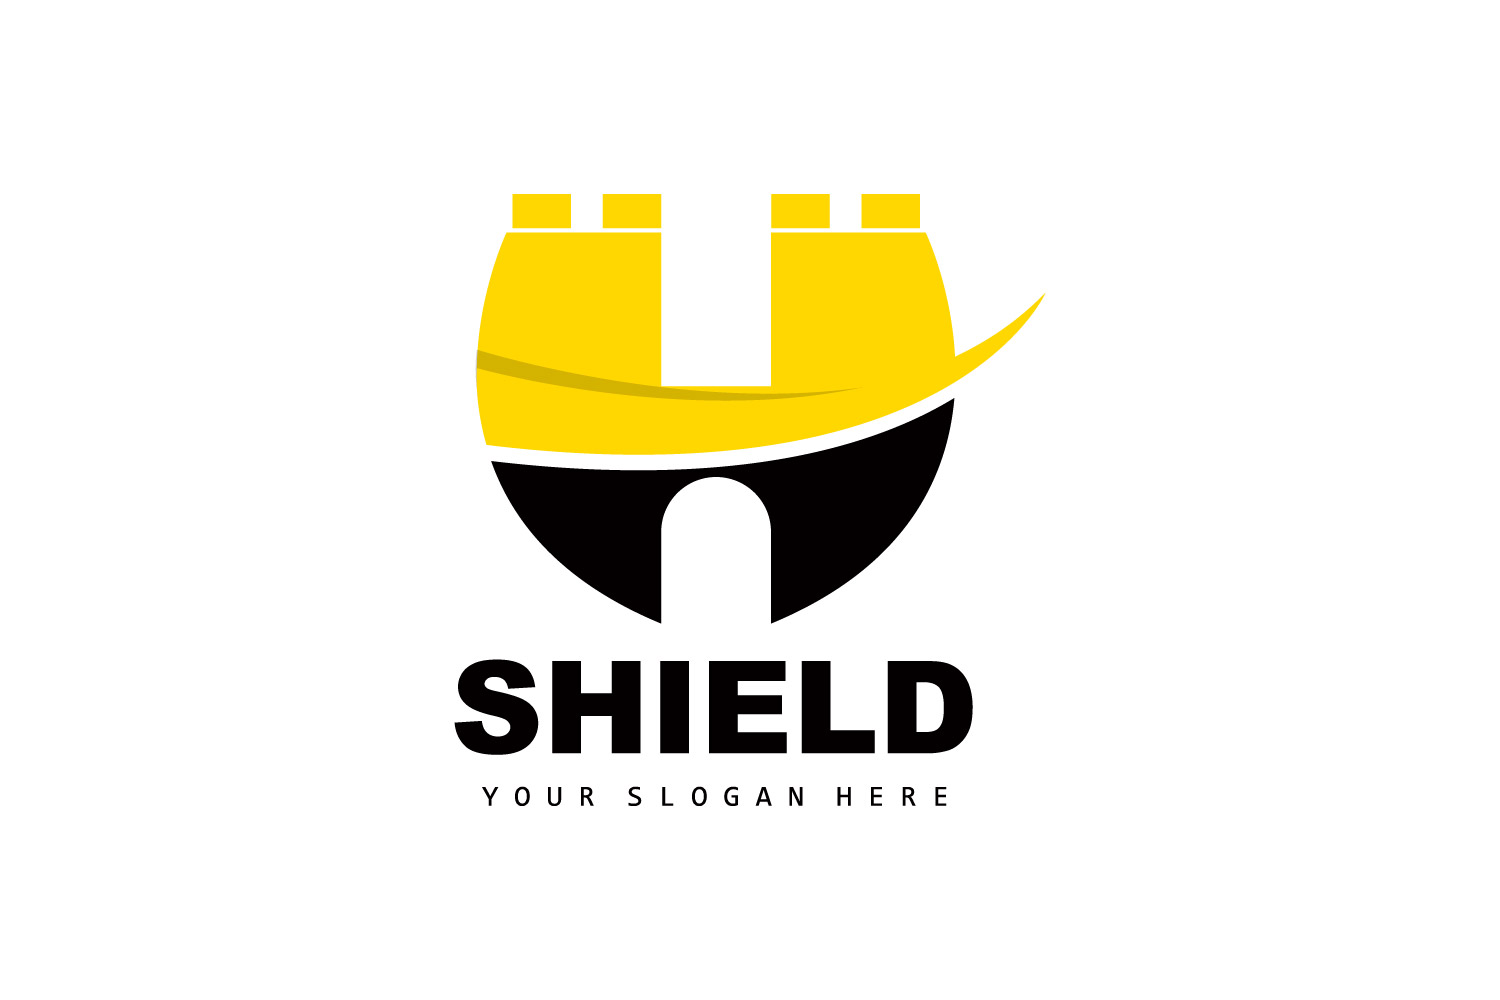 Simple Shield Logo Design Vector TemplateV12